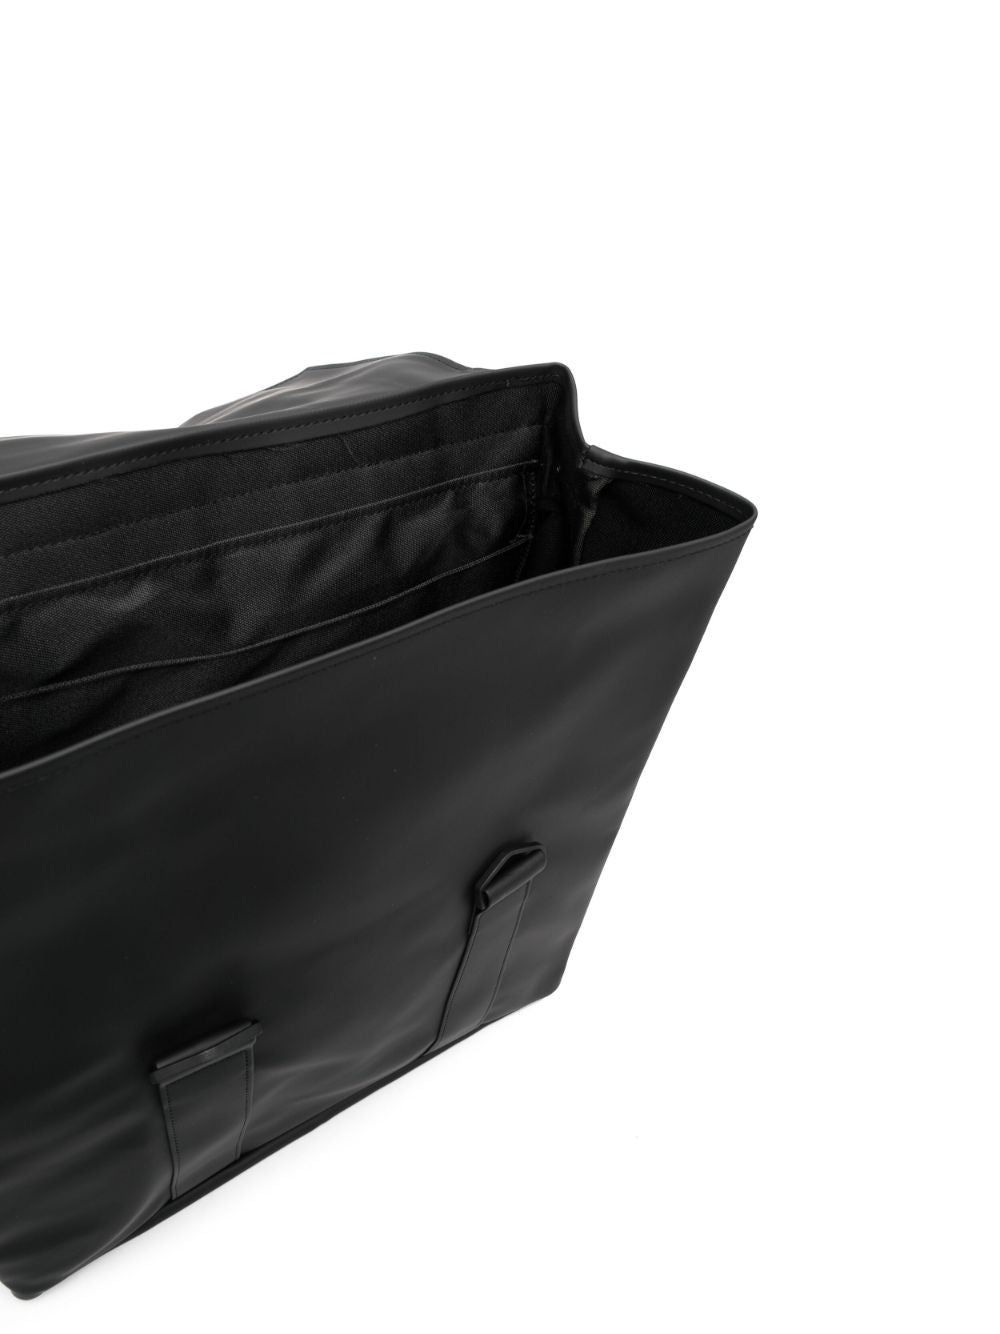 Medium black backpack